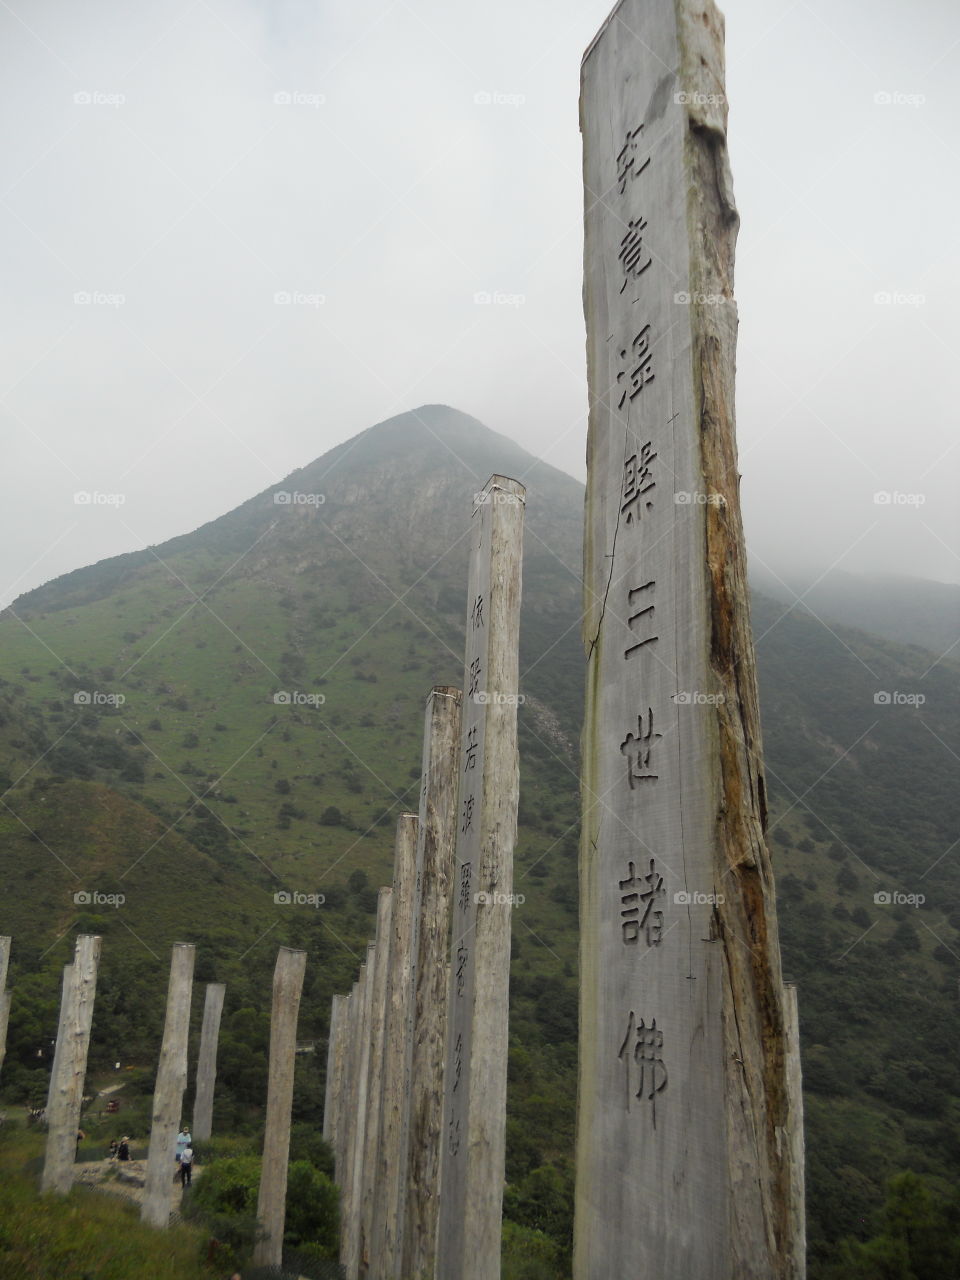 The Heart Sutra carved on wooden posts along a path surrounding the "Big Buddha" (Tian Tan Buddha)  on Lantau  Hong Kong